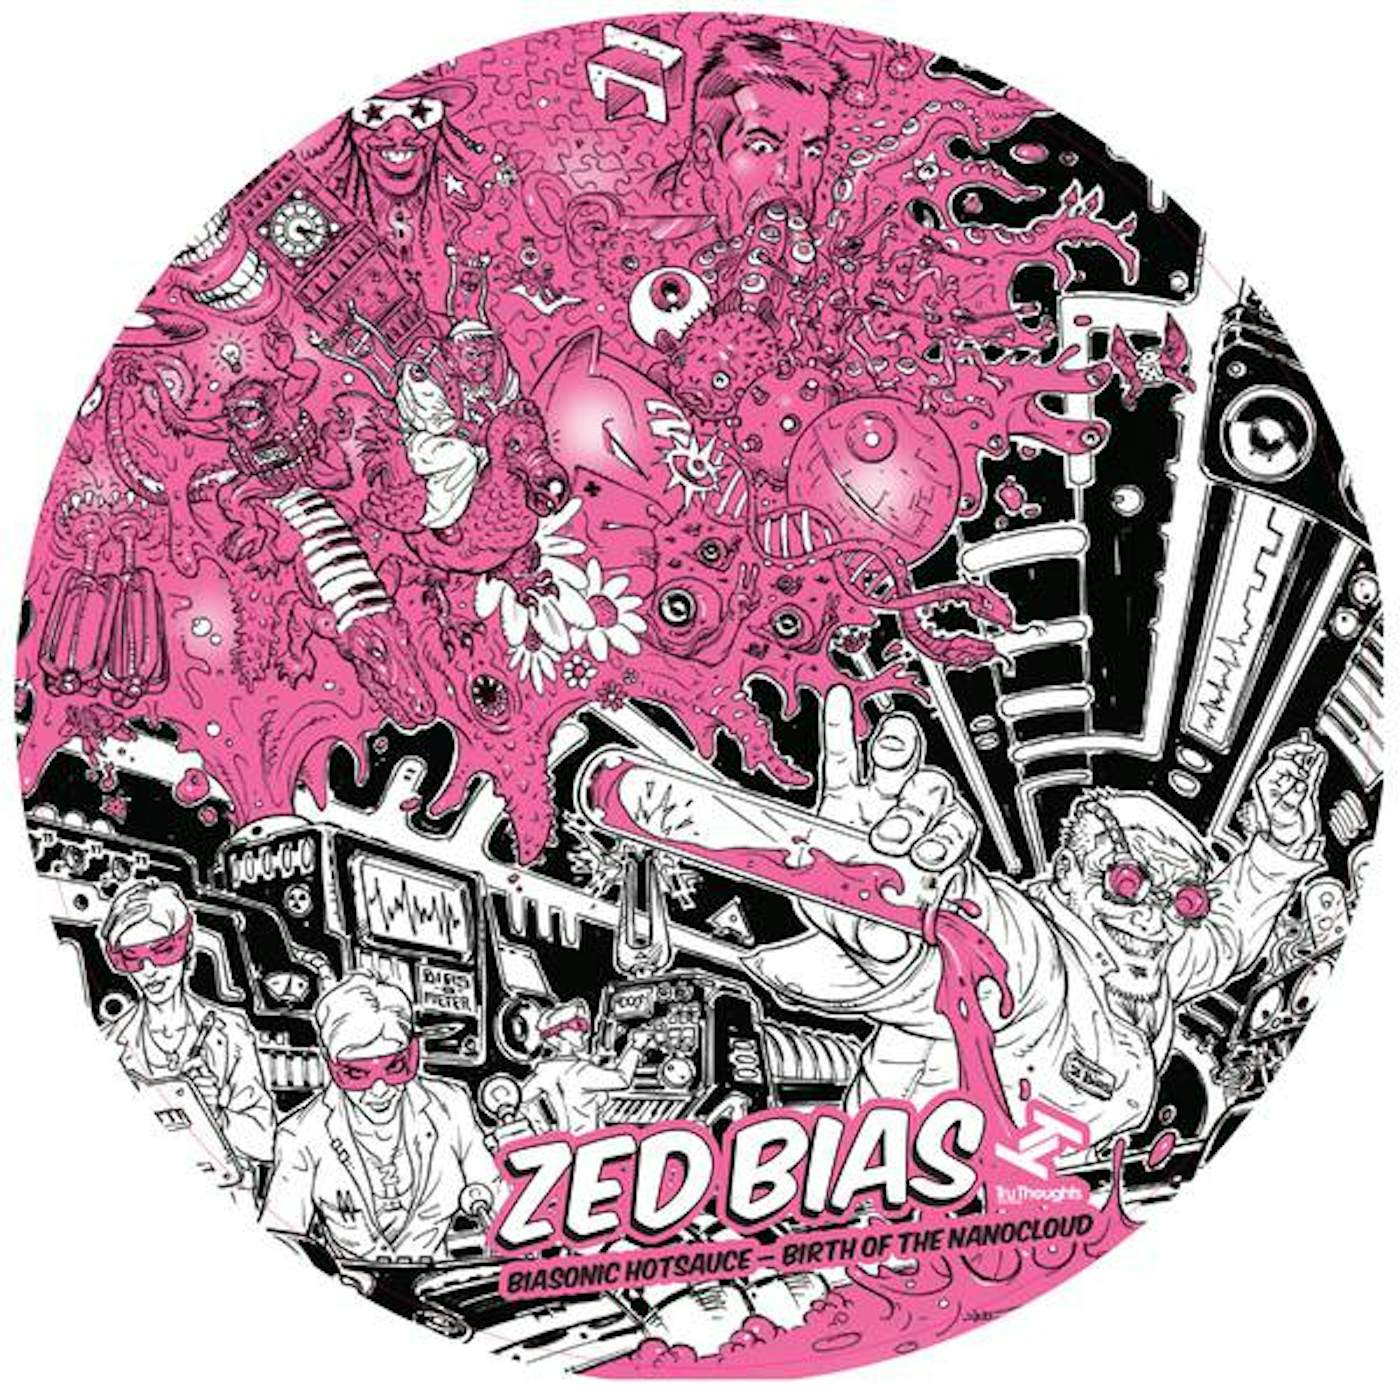 Zed Bias BADNESS Vinyl Record